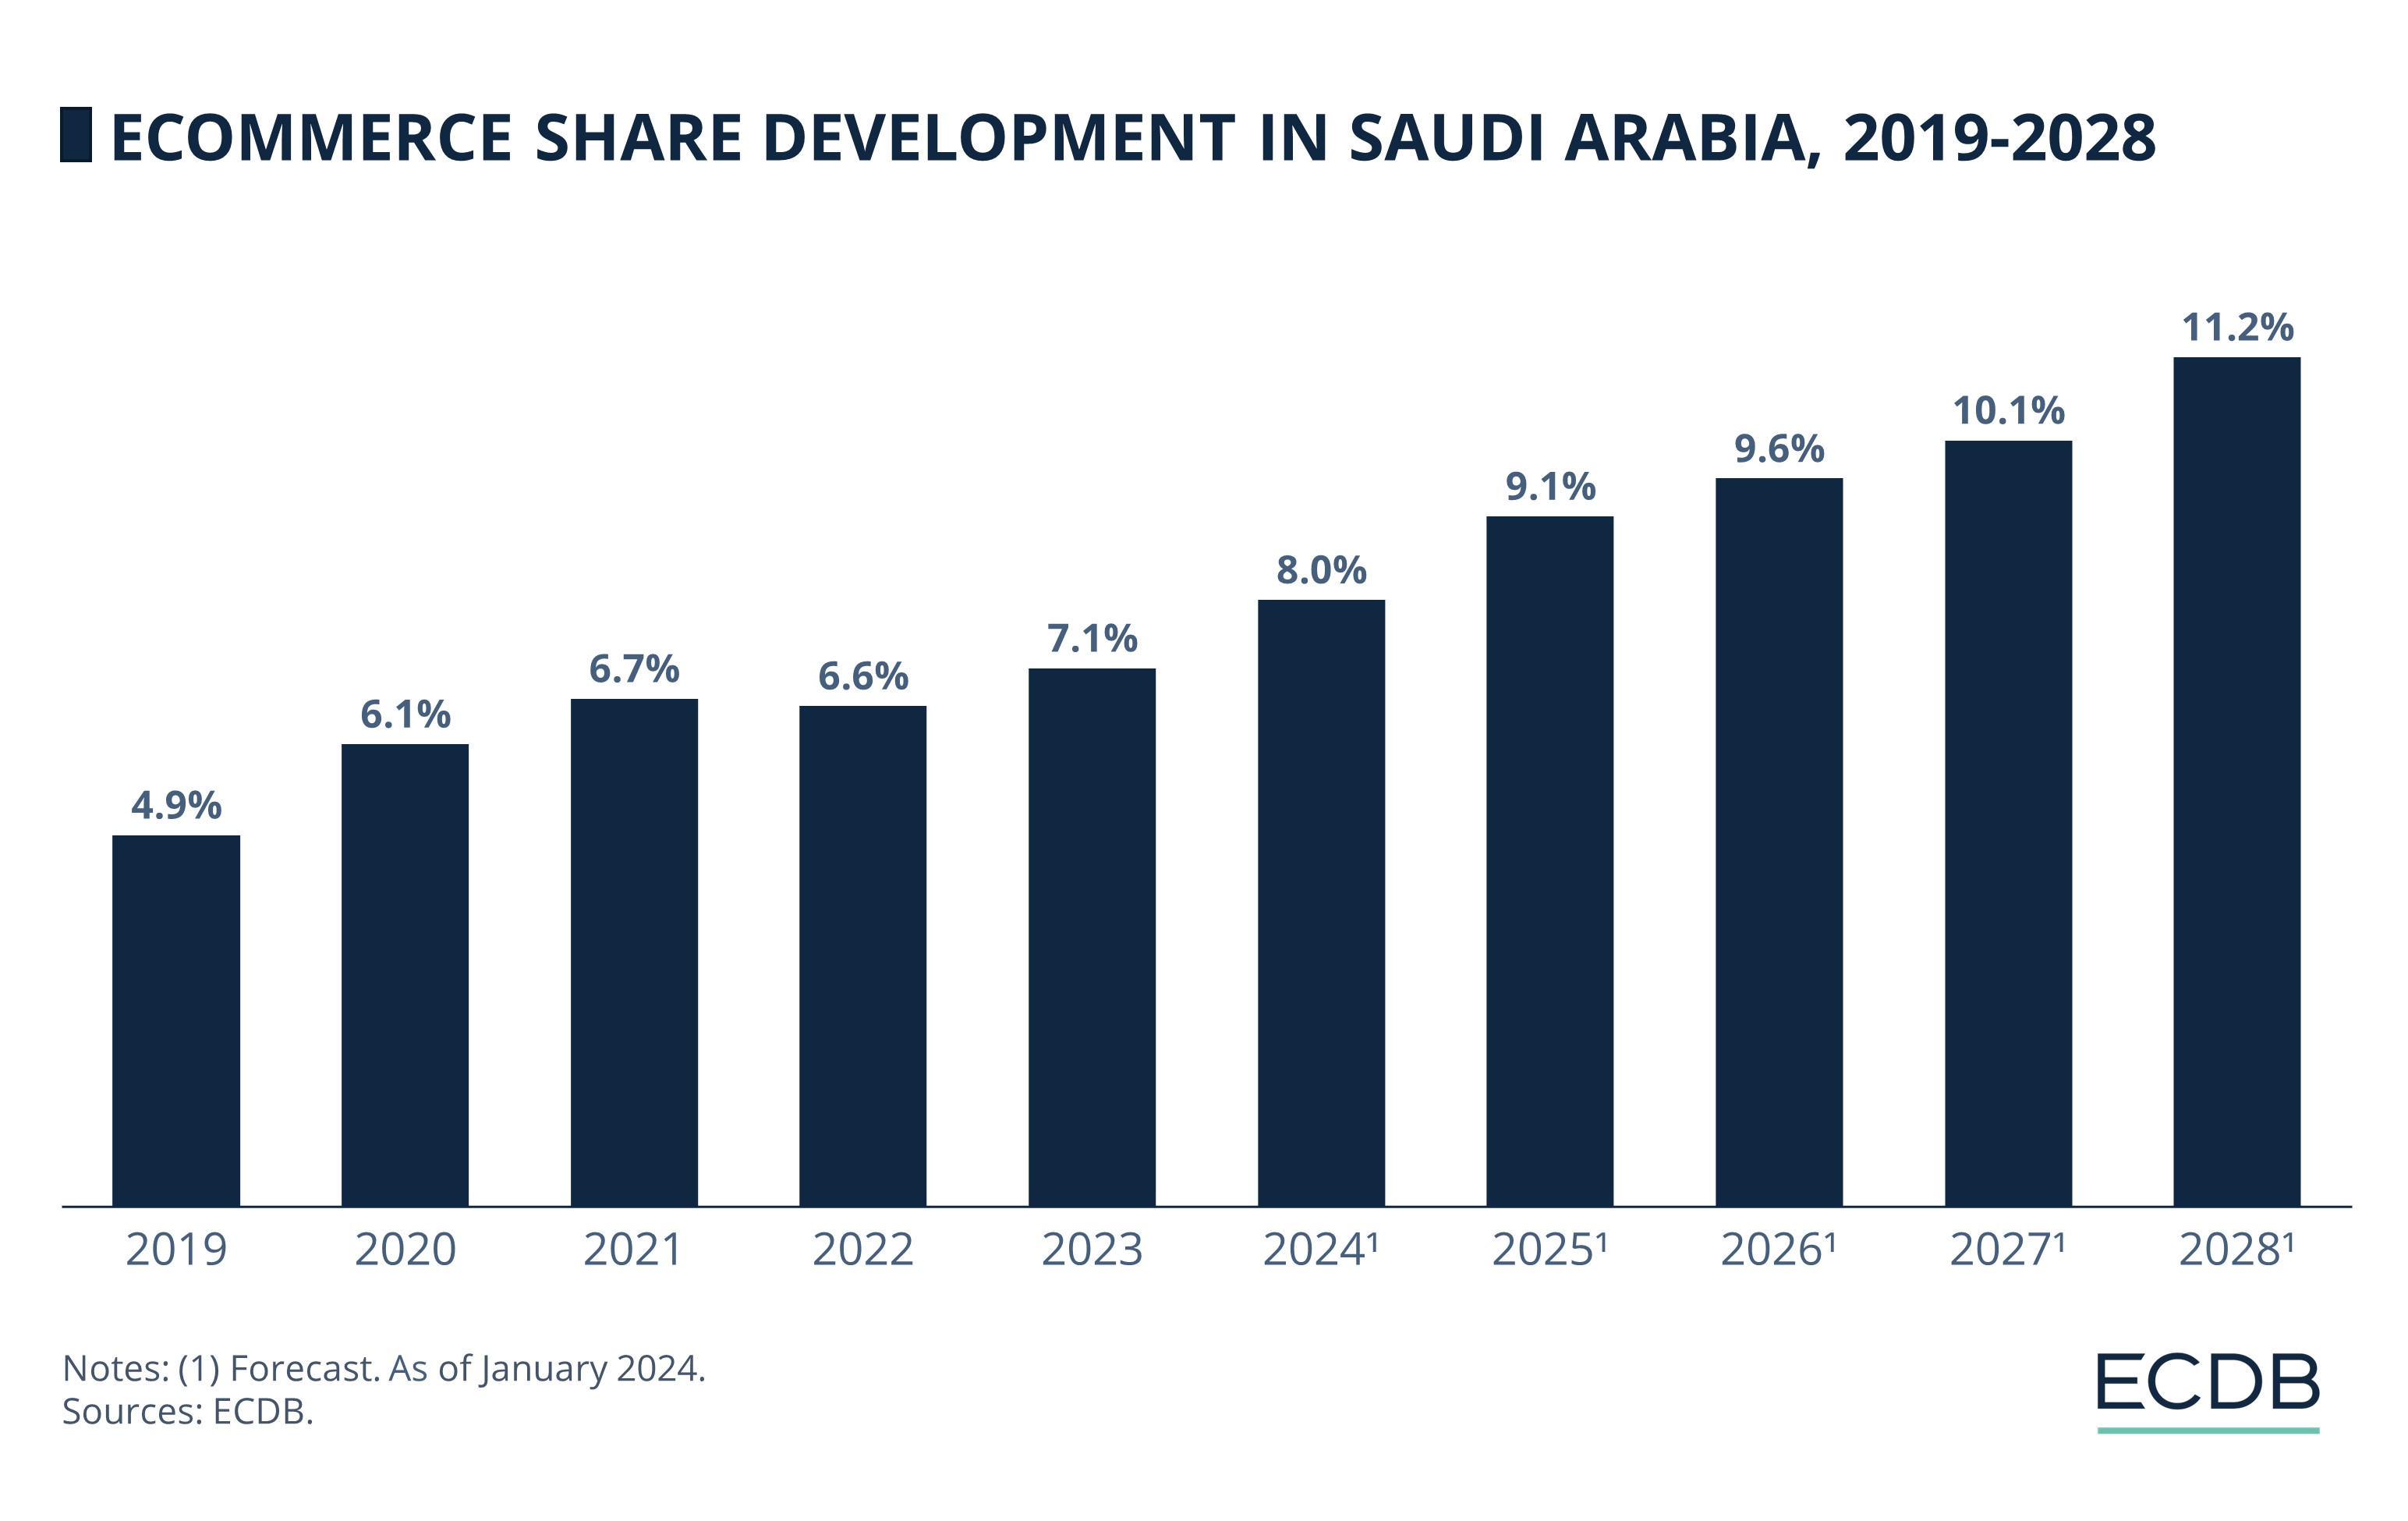 Ecommerce Share Development in Saudi Arabia, 2019-2028